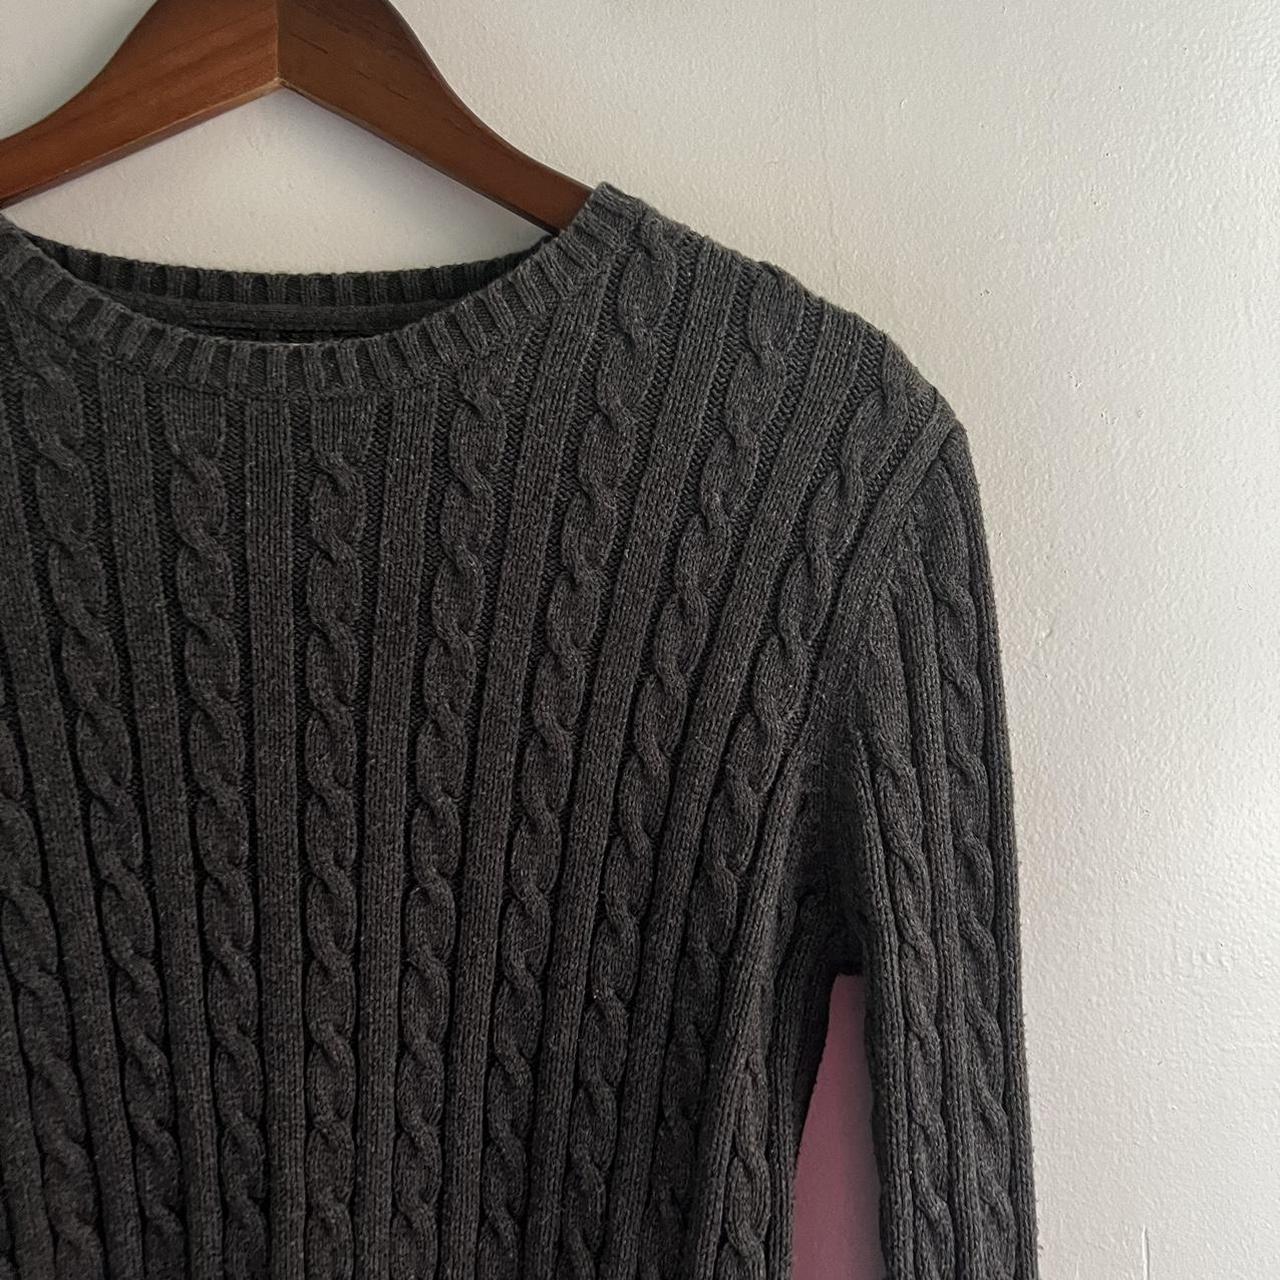 2000s vintage Tommy Hilfiger grey knit cable knit... - Depop